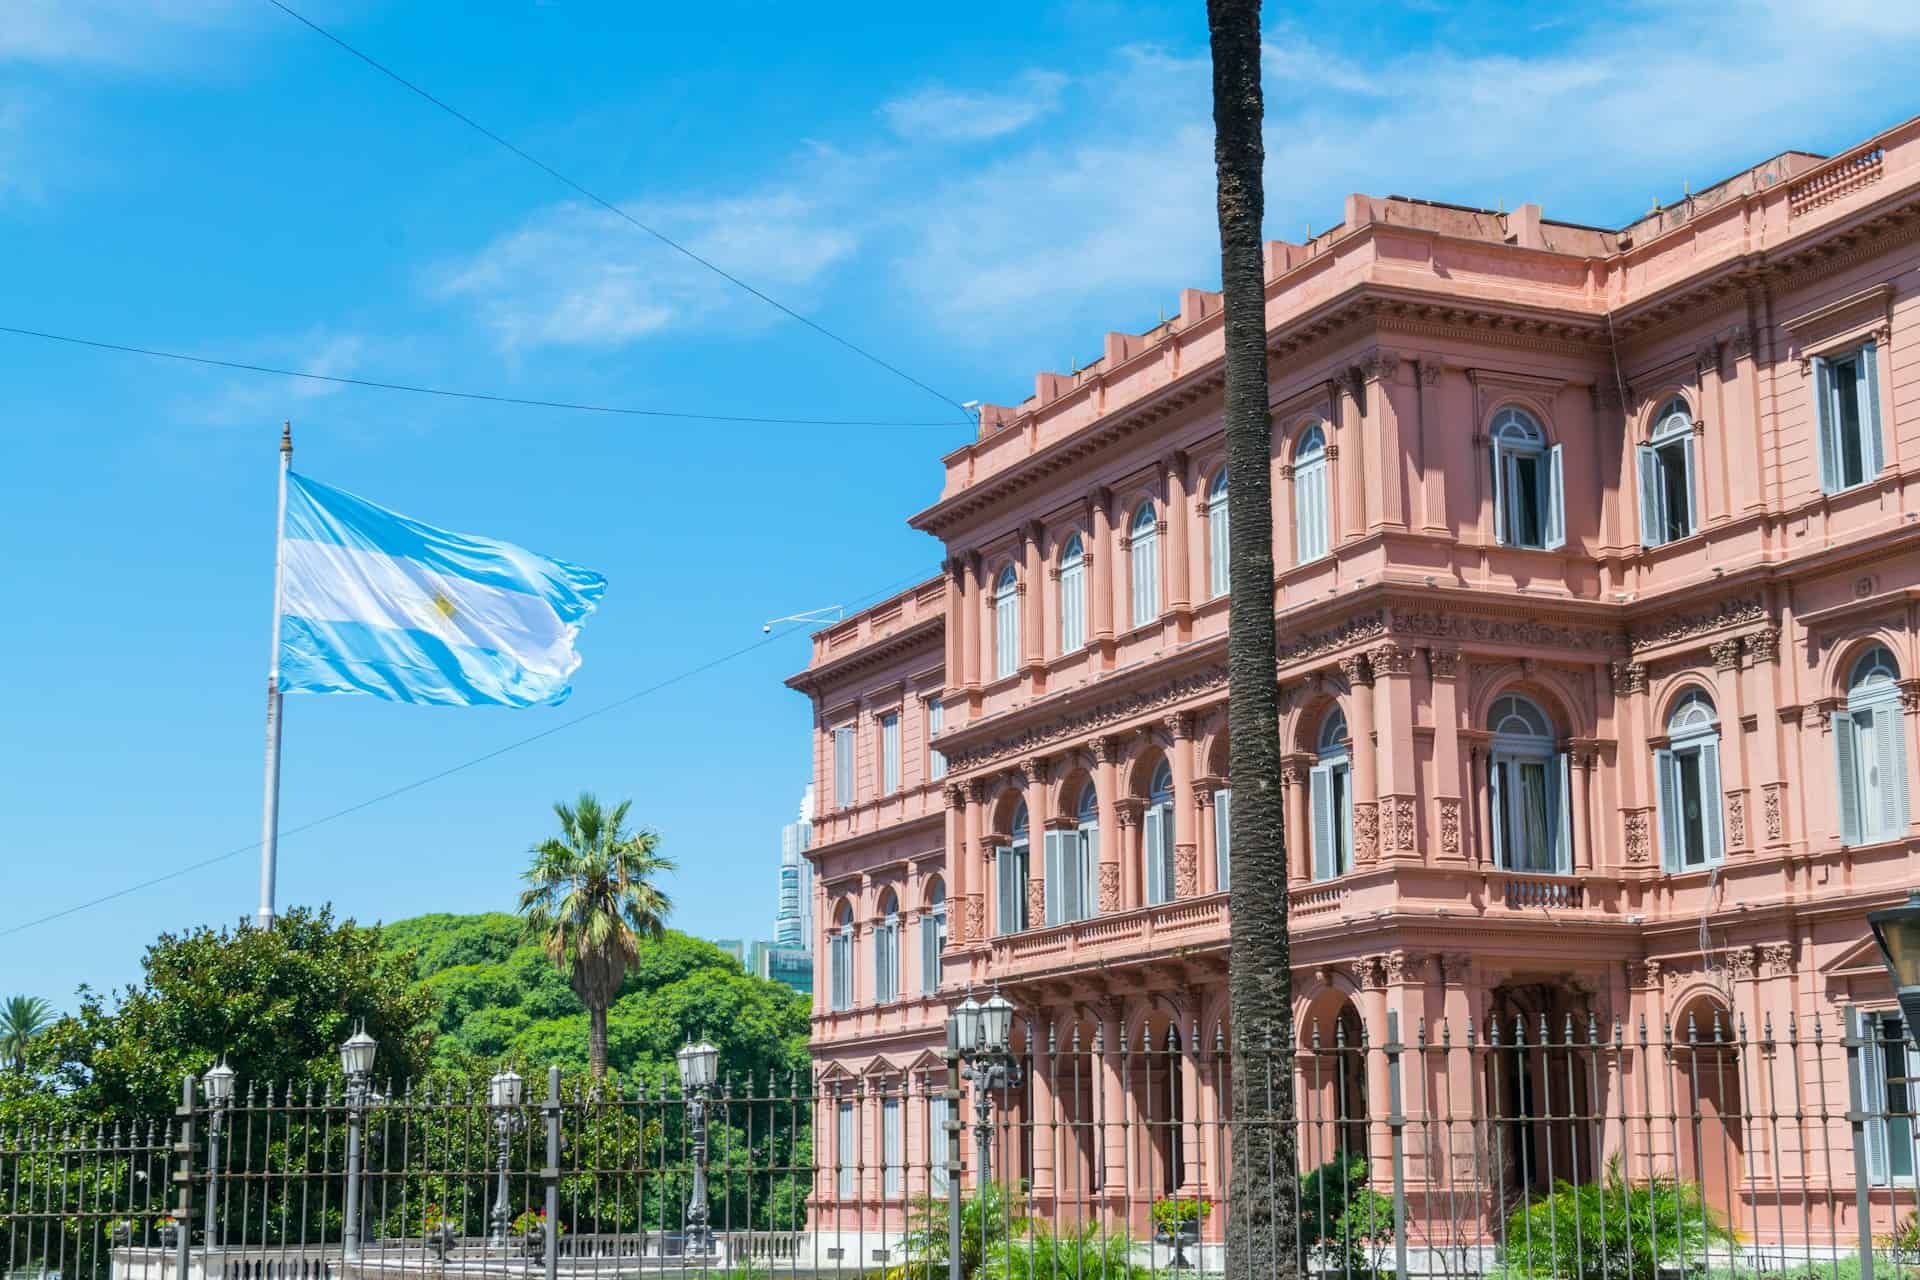 Casa Rosada, Argentina's government building in Buenos Aires.